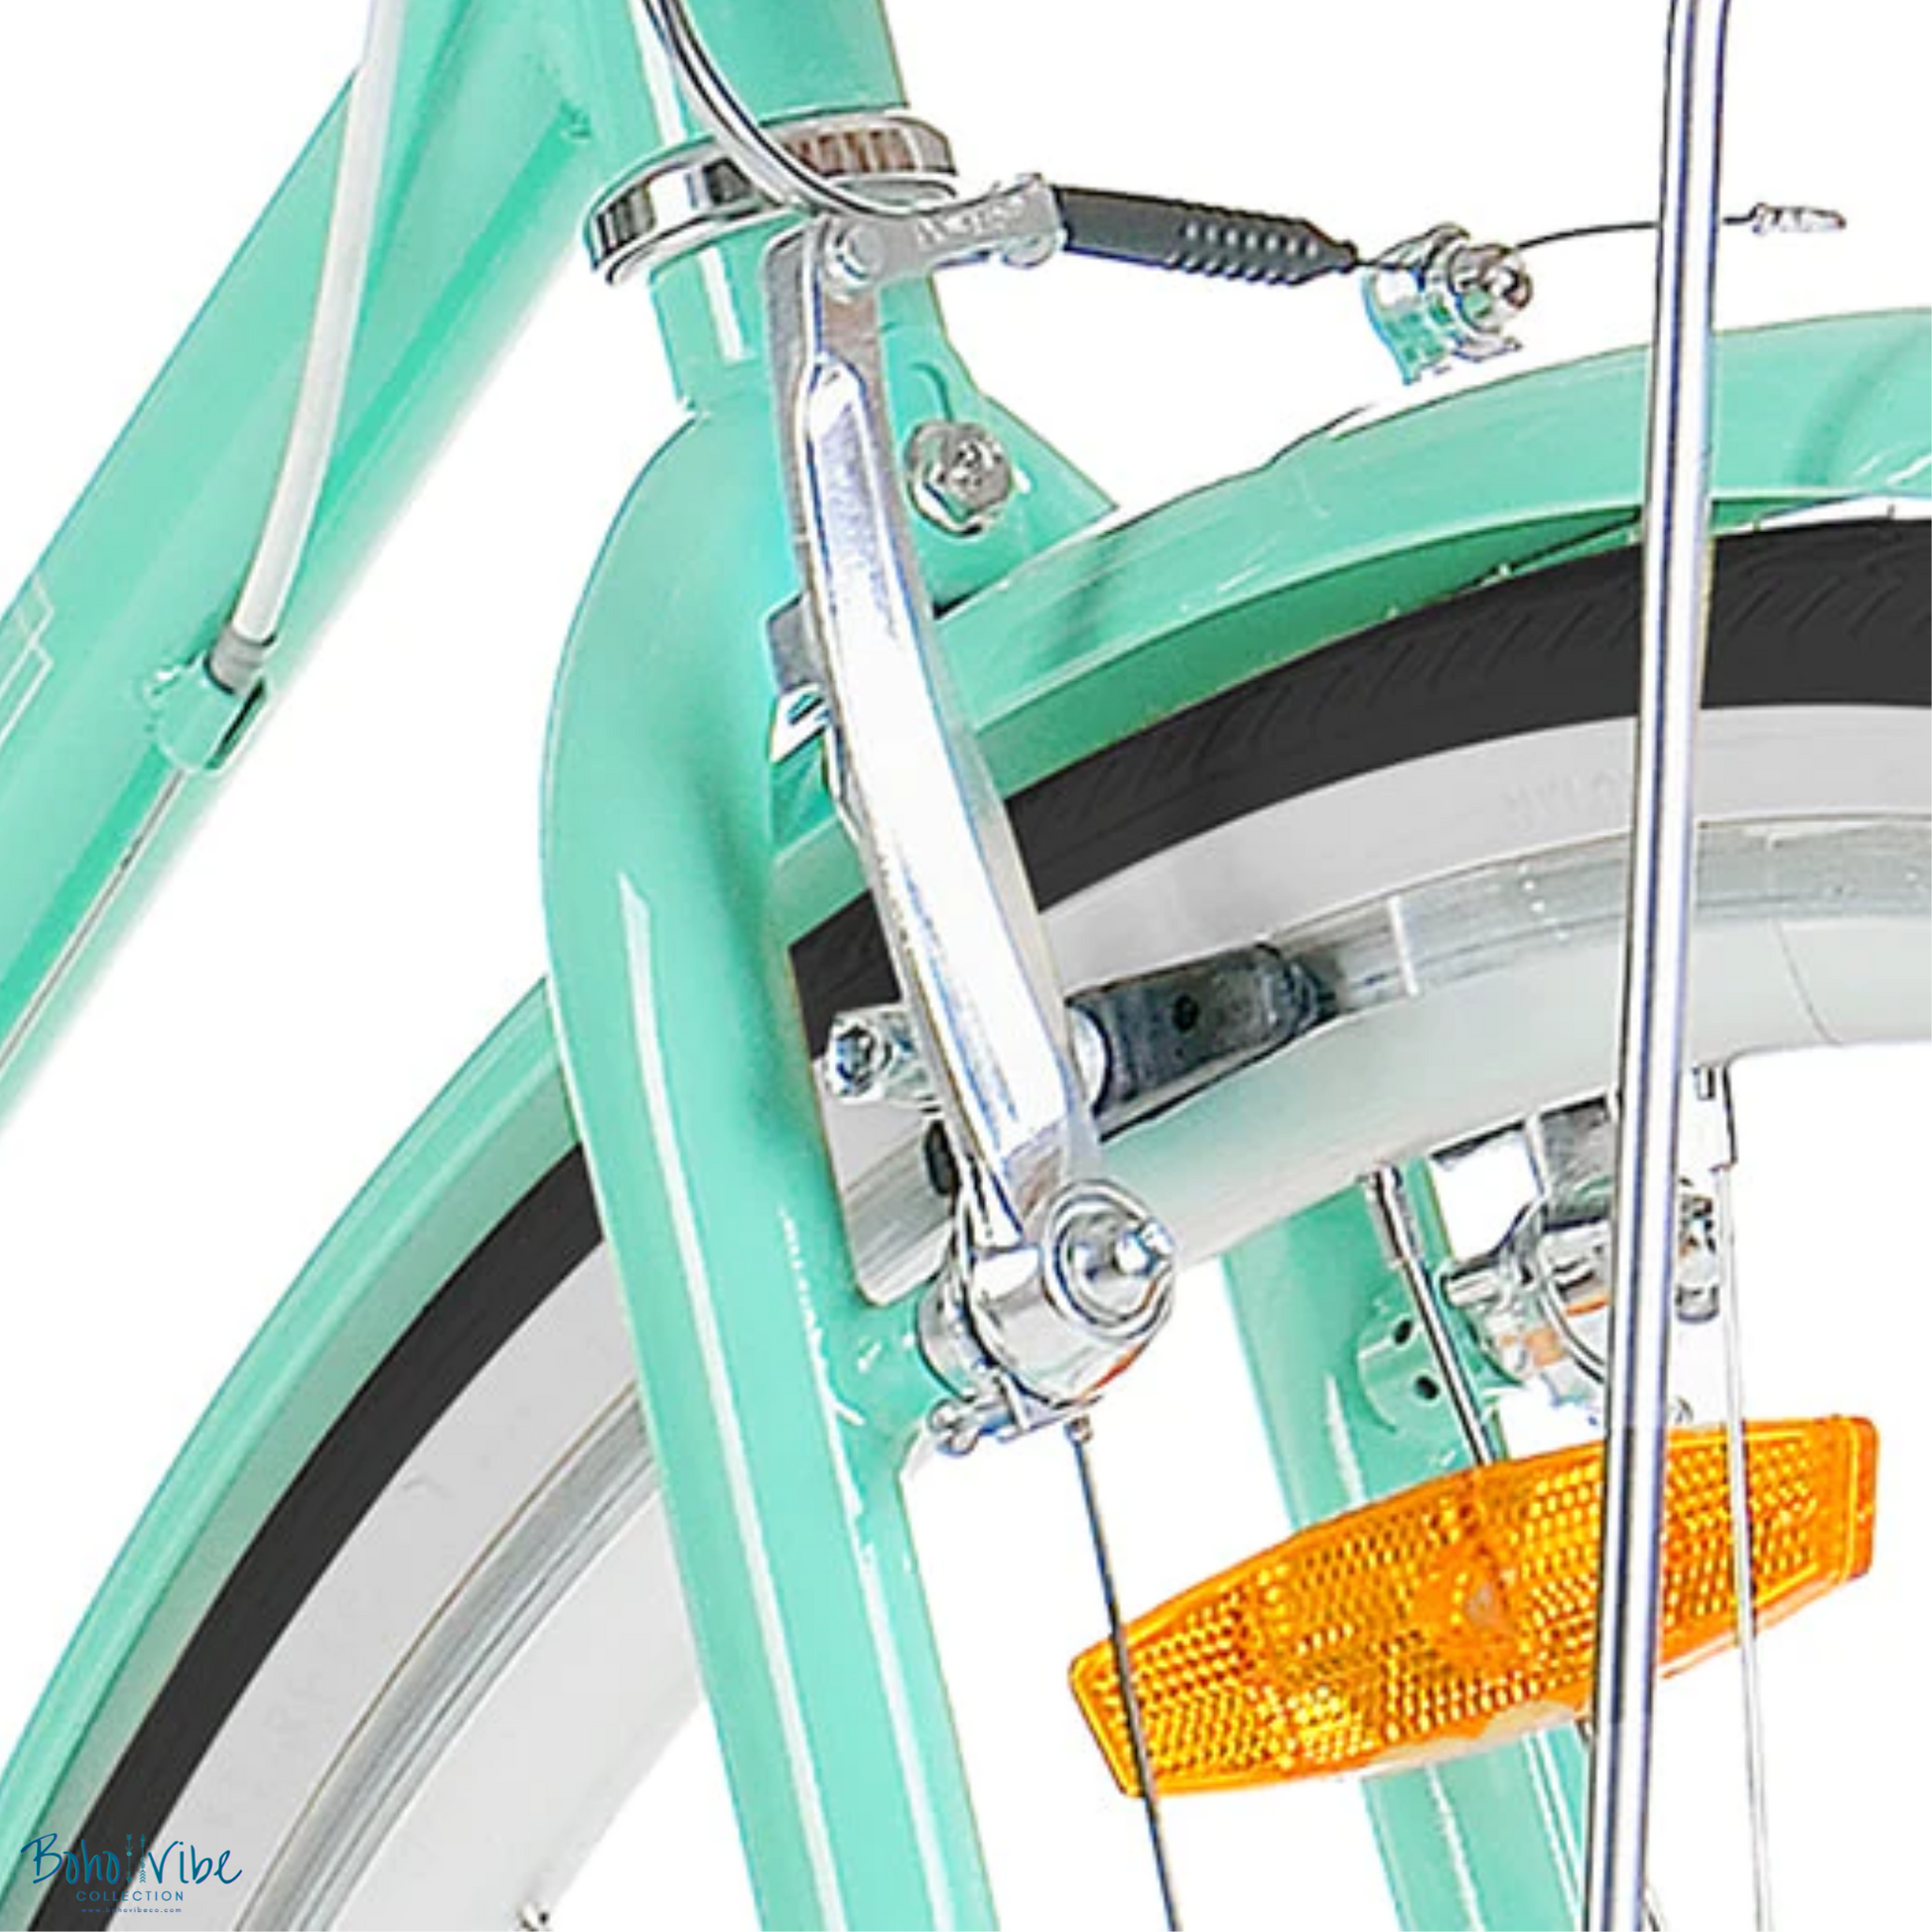 Boho ↡↟ Vibe Collection ↠  Vintage Cruiser Progear Pomona Coastal Commuter Bike Mint Ladies Teen 15" with Basket